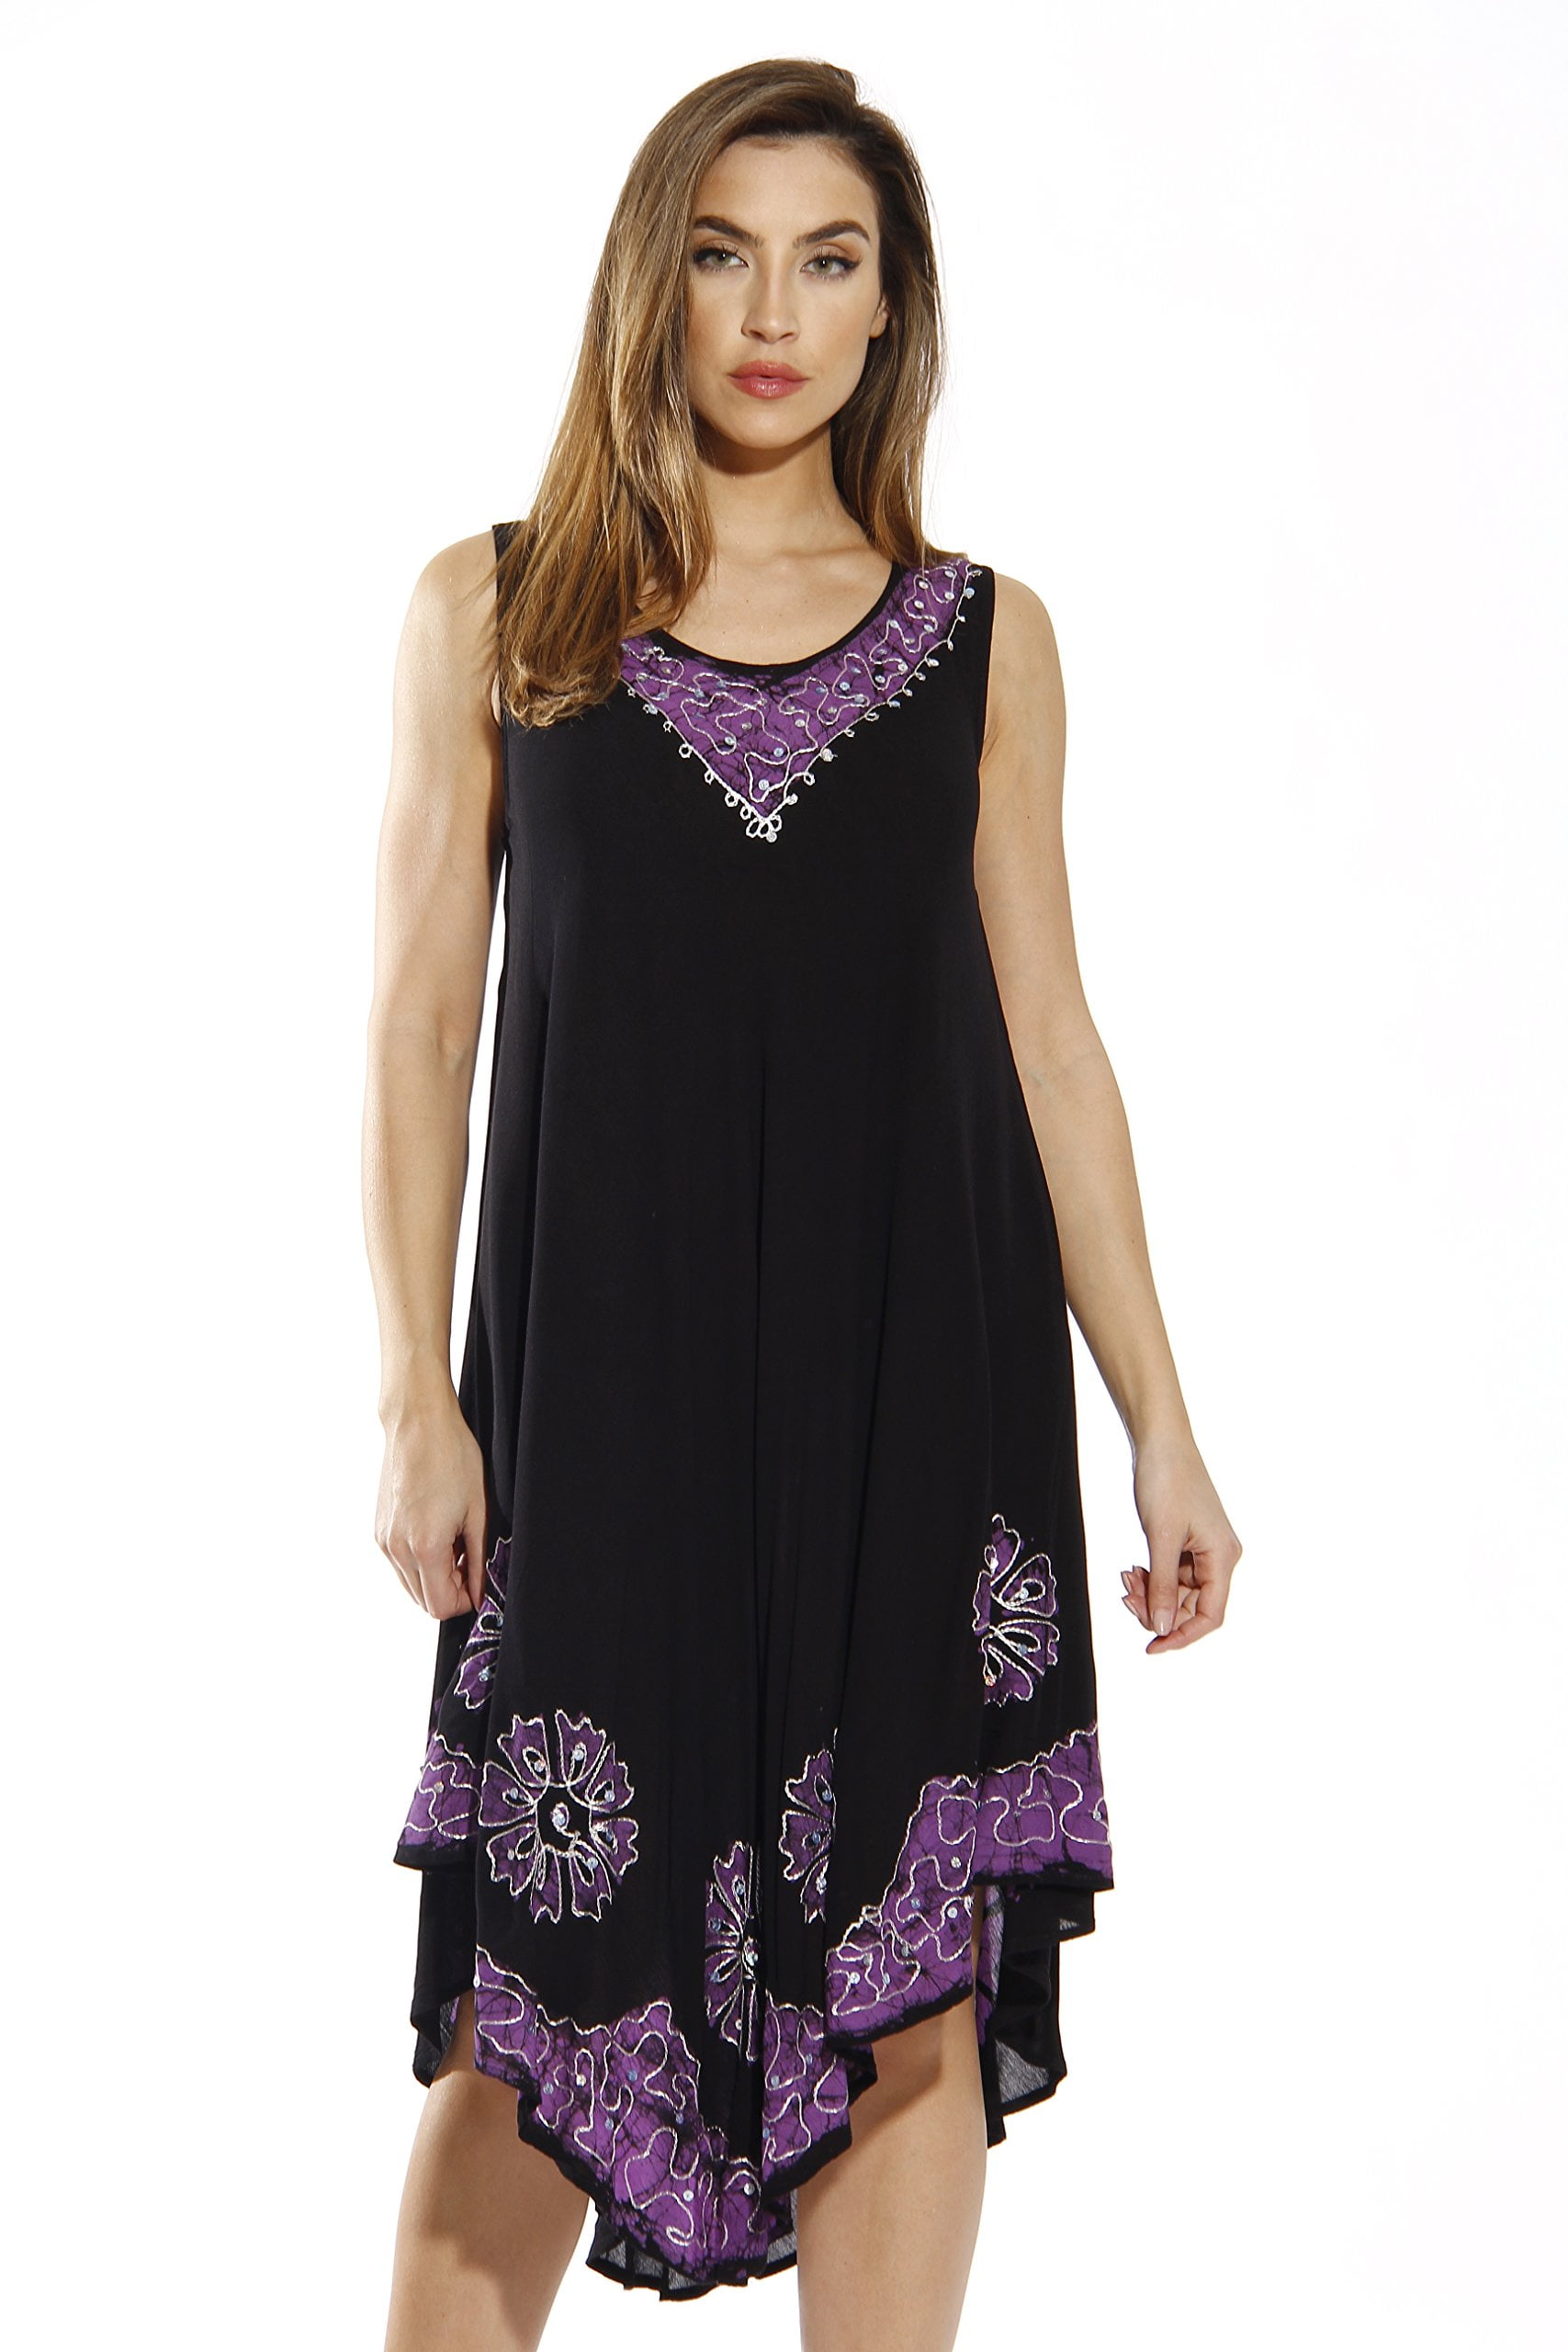 Riviera Sun - Riviera Sun Dress / Dresses for Women (Black / Purple, 2X ...